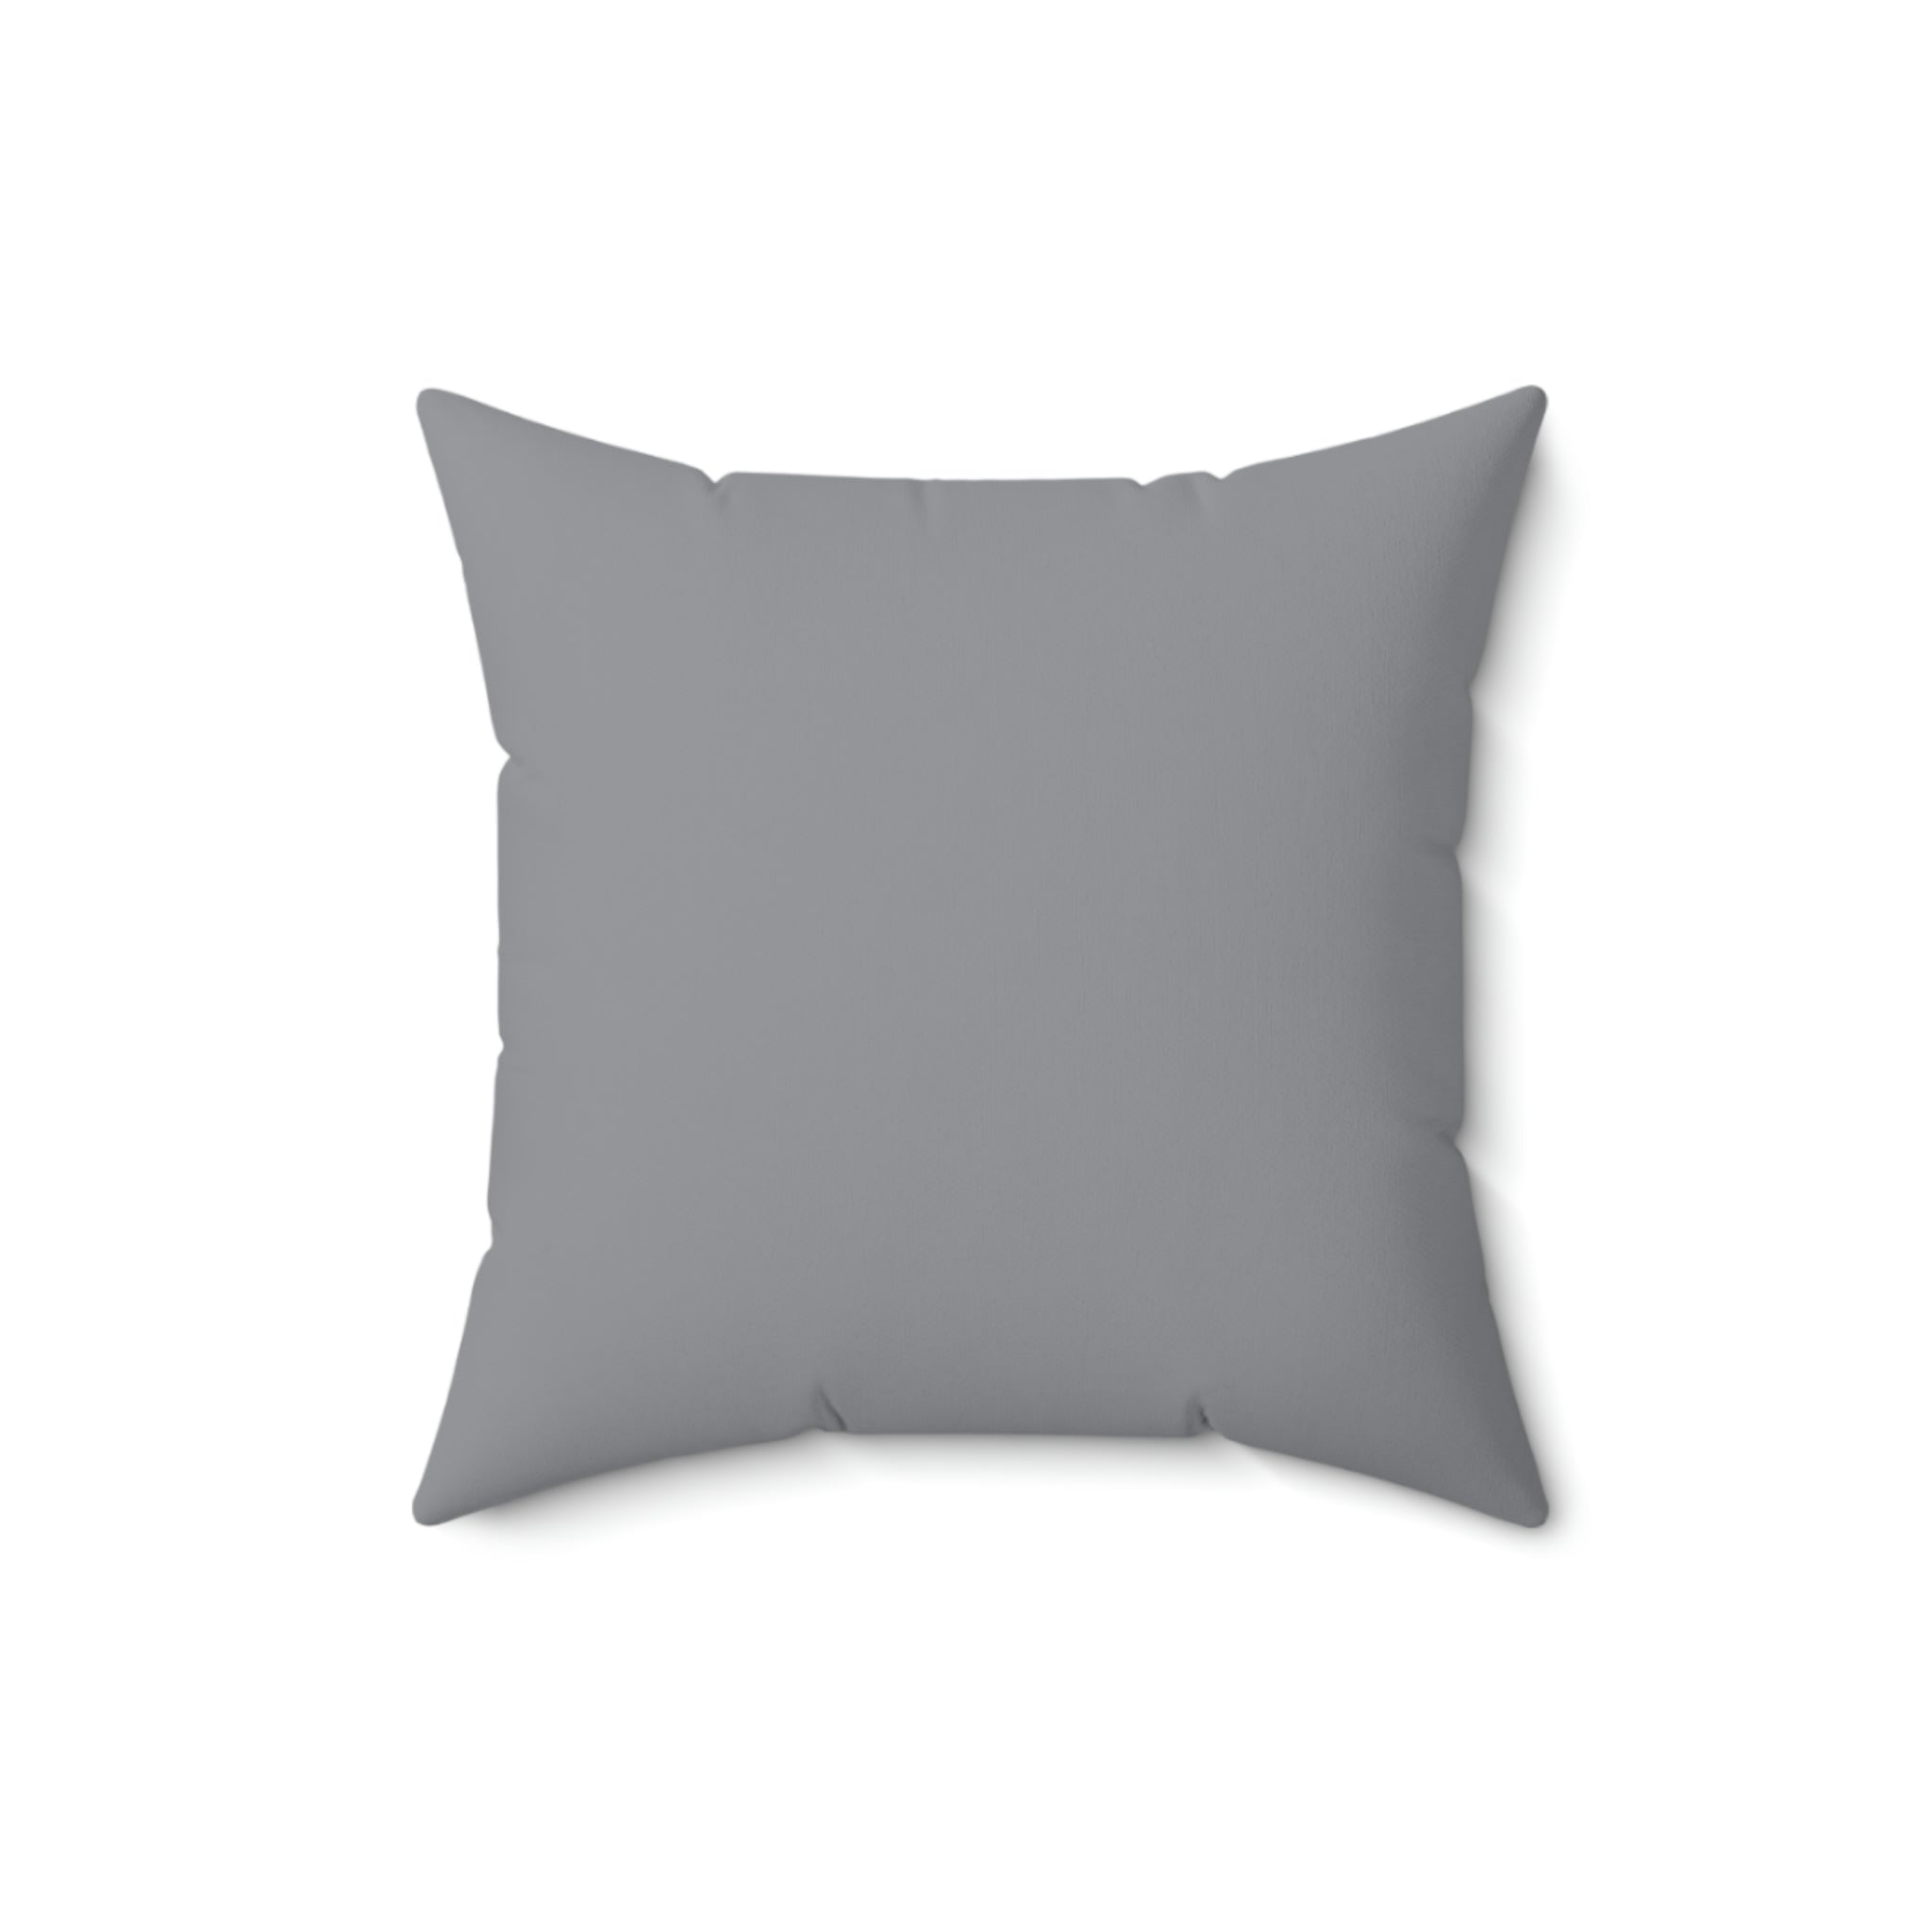 Spun Polyester Pillow Happy Face off white/grey